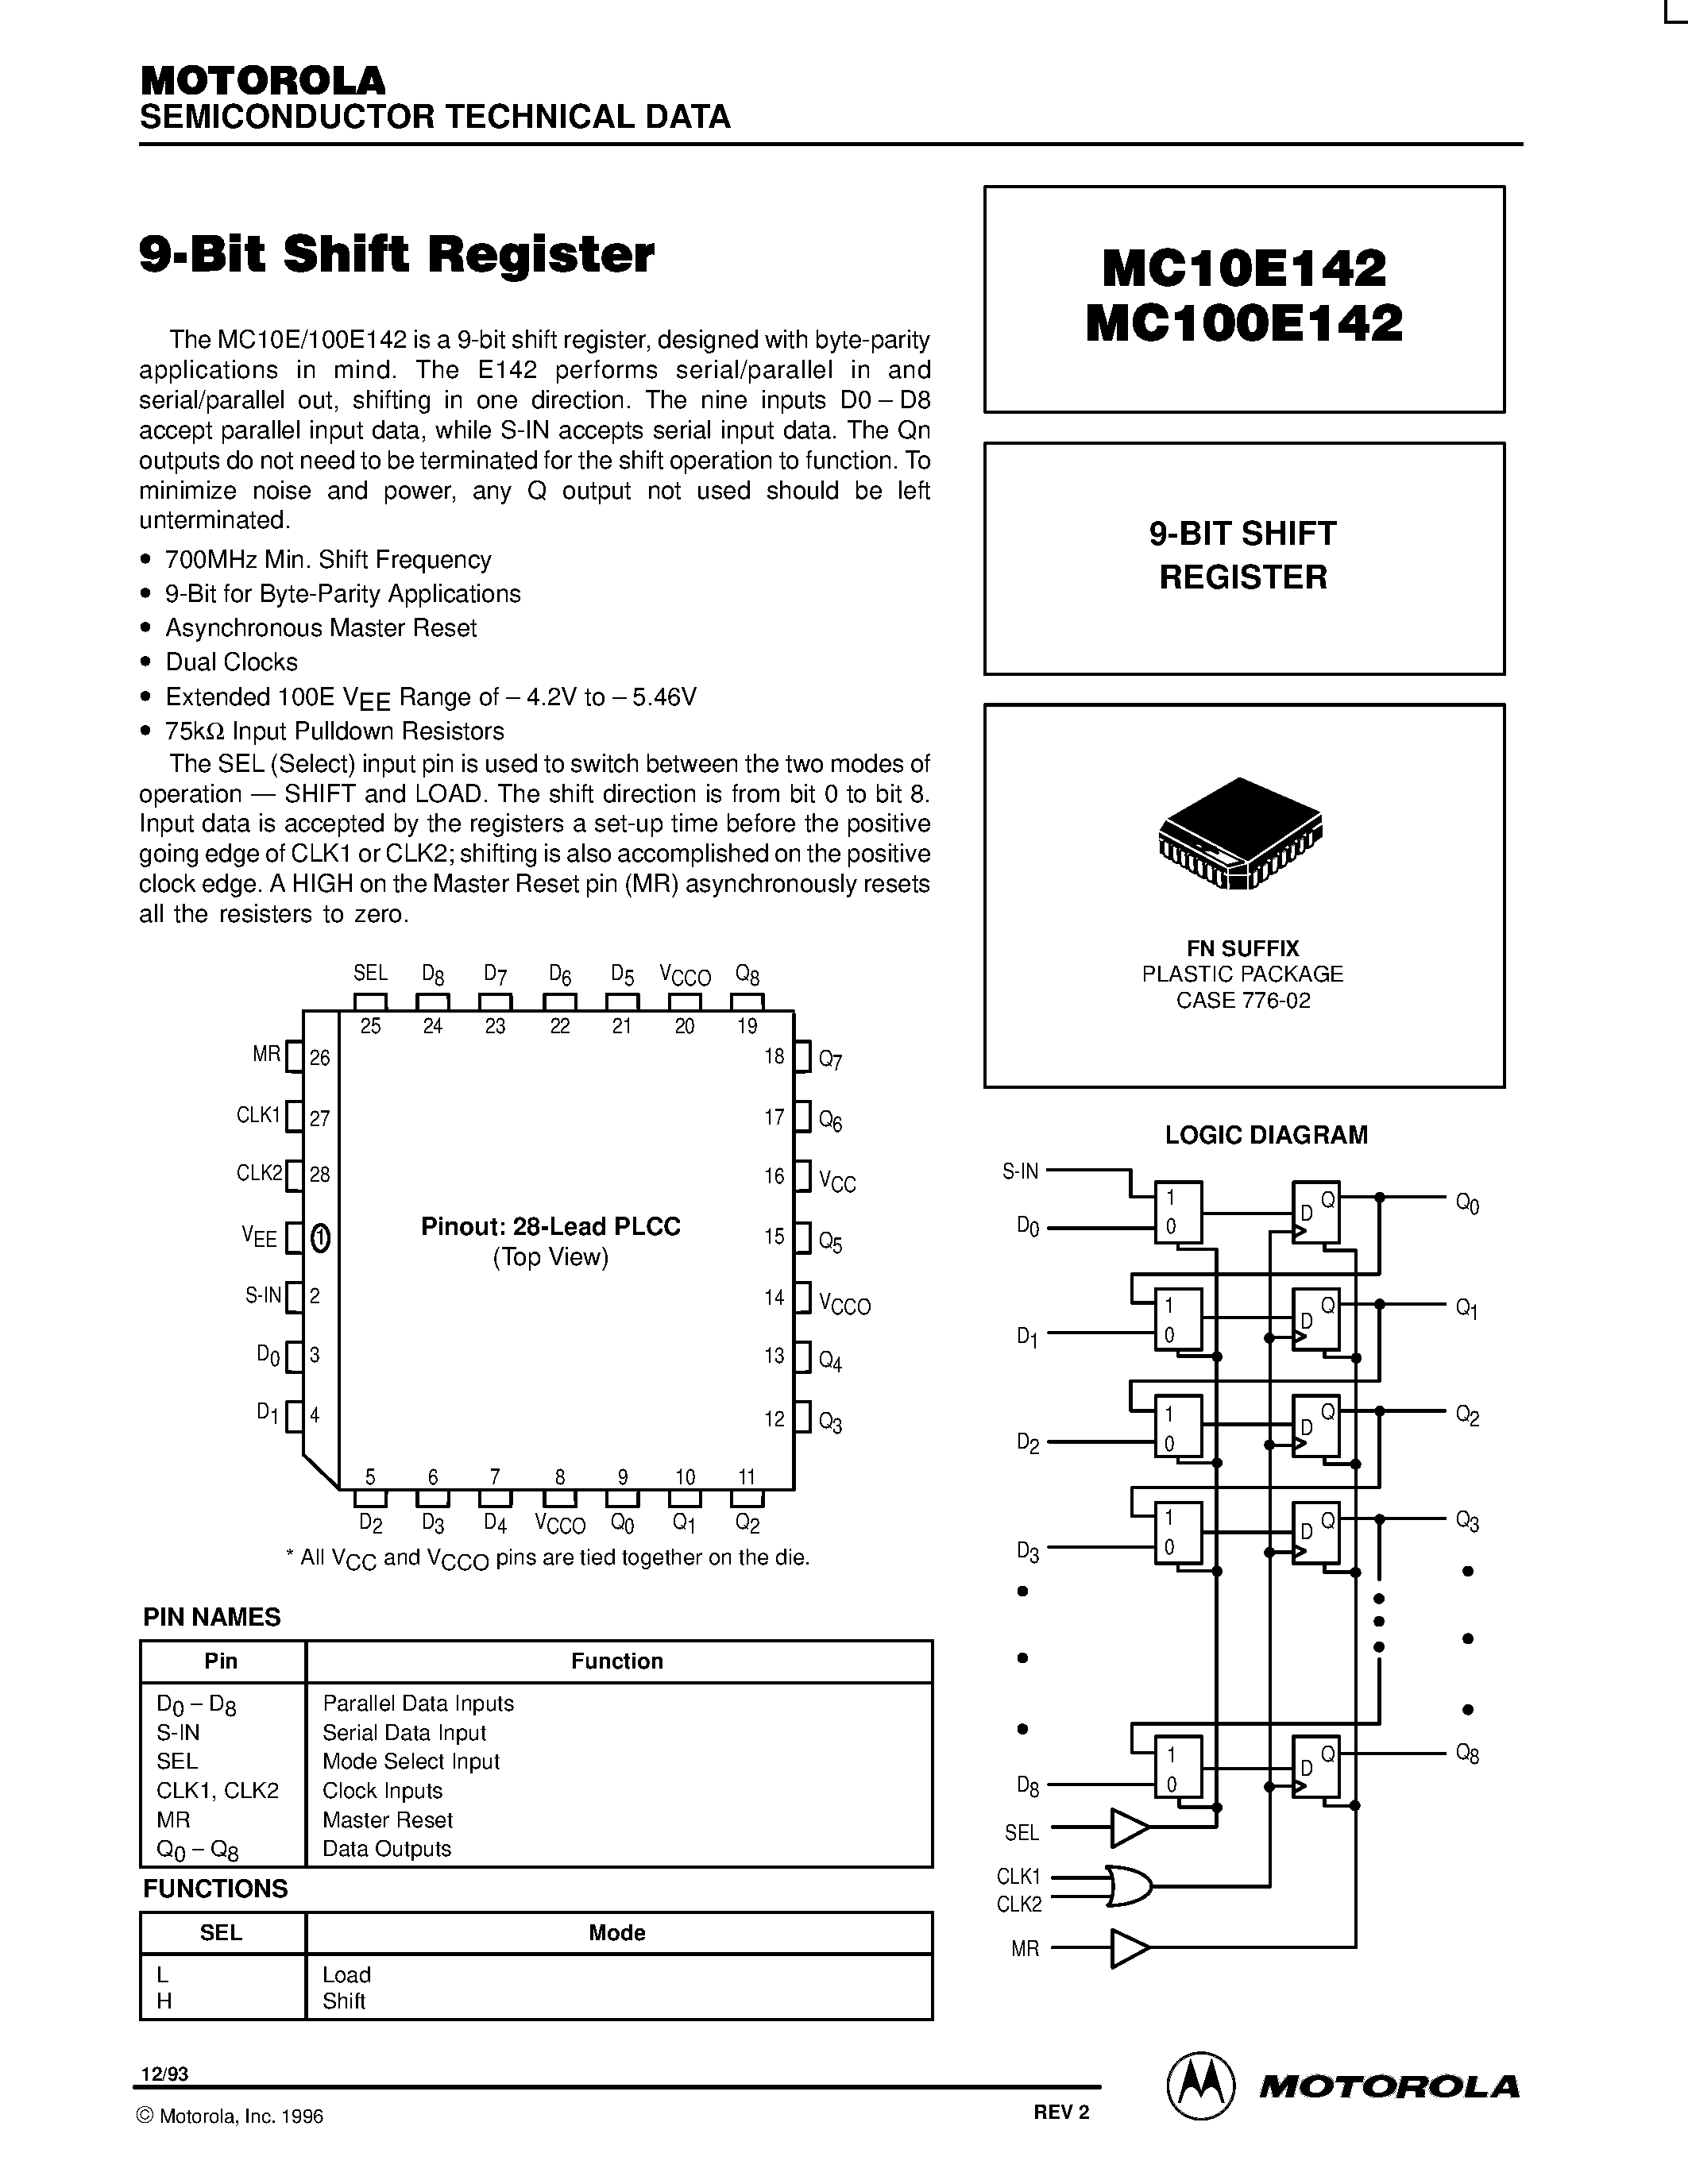 Datasheet MC100E142FN - 9-BIT SHIFT REGISTER page 1